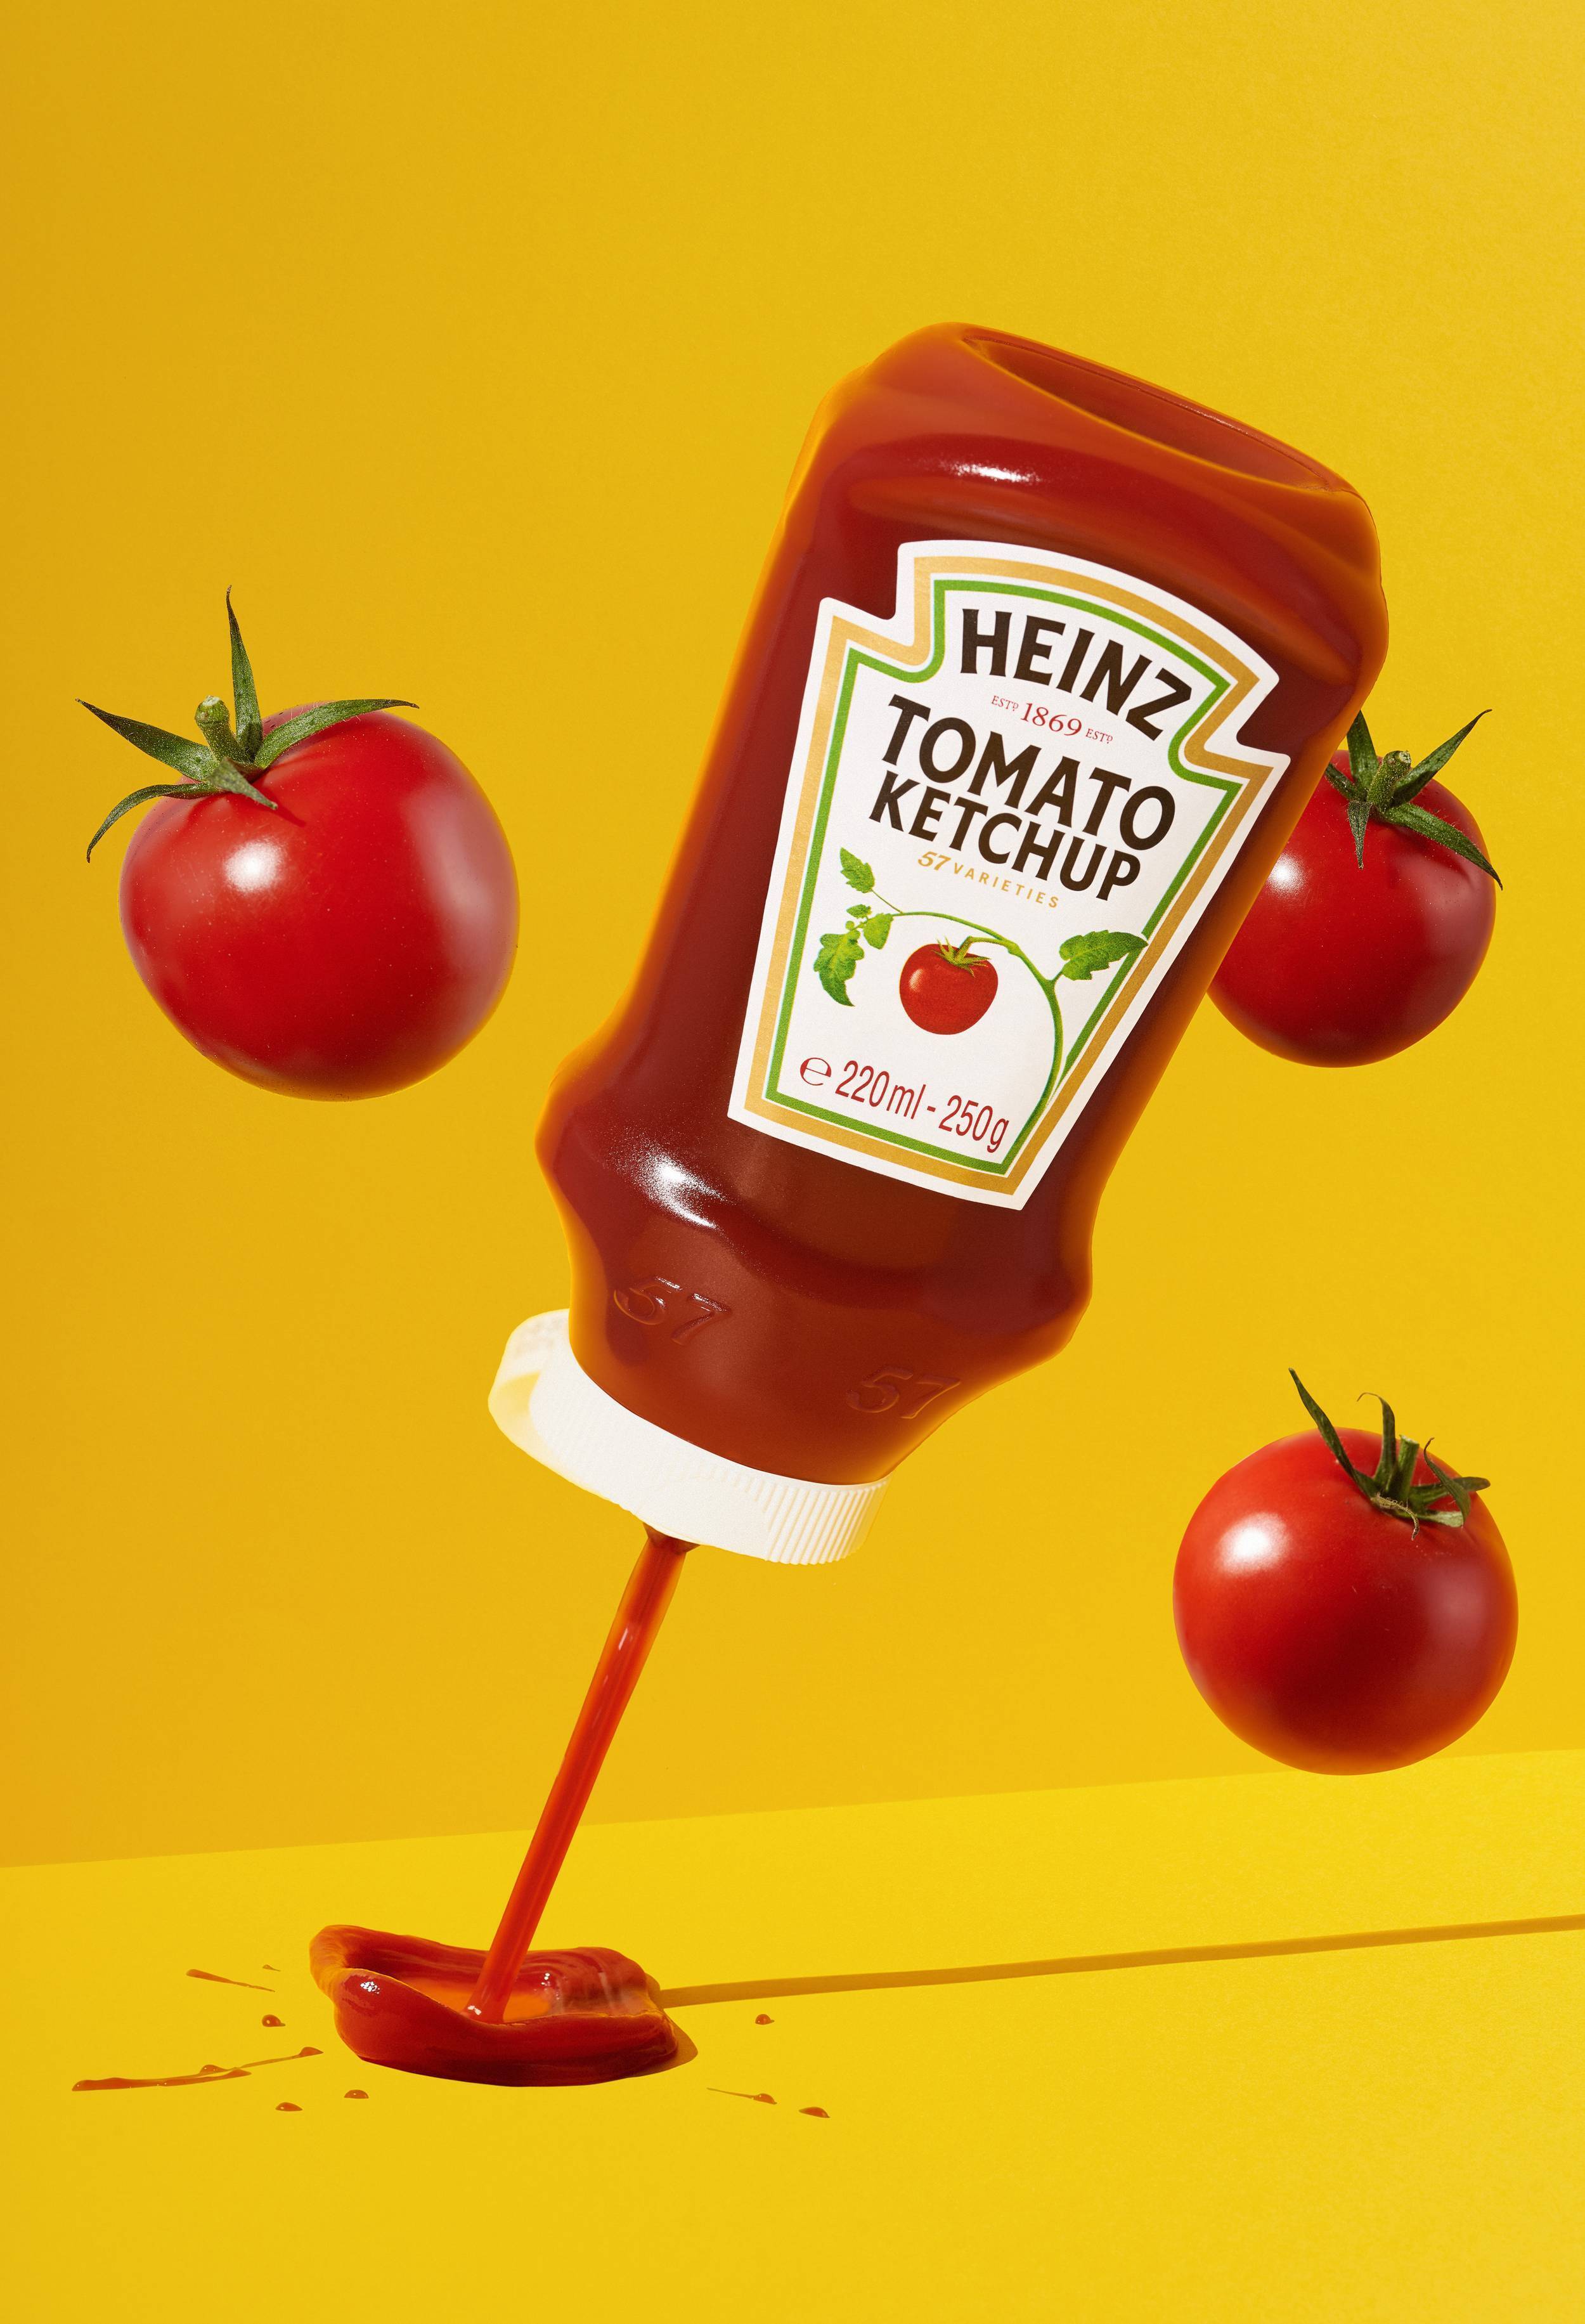 Heinz-Tomato-Ketchup-rocket-v3s-finall_edit_gNW7yj1fY.jpg